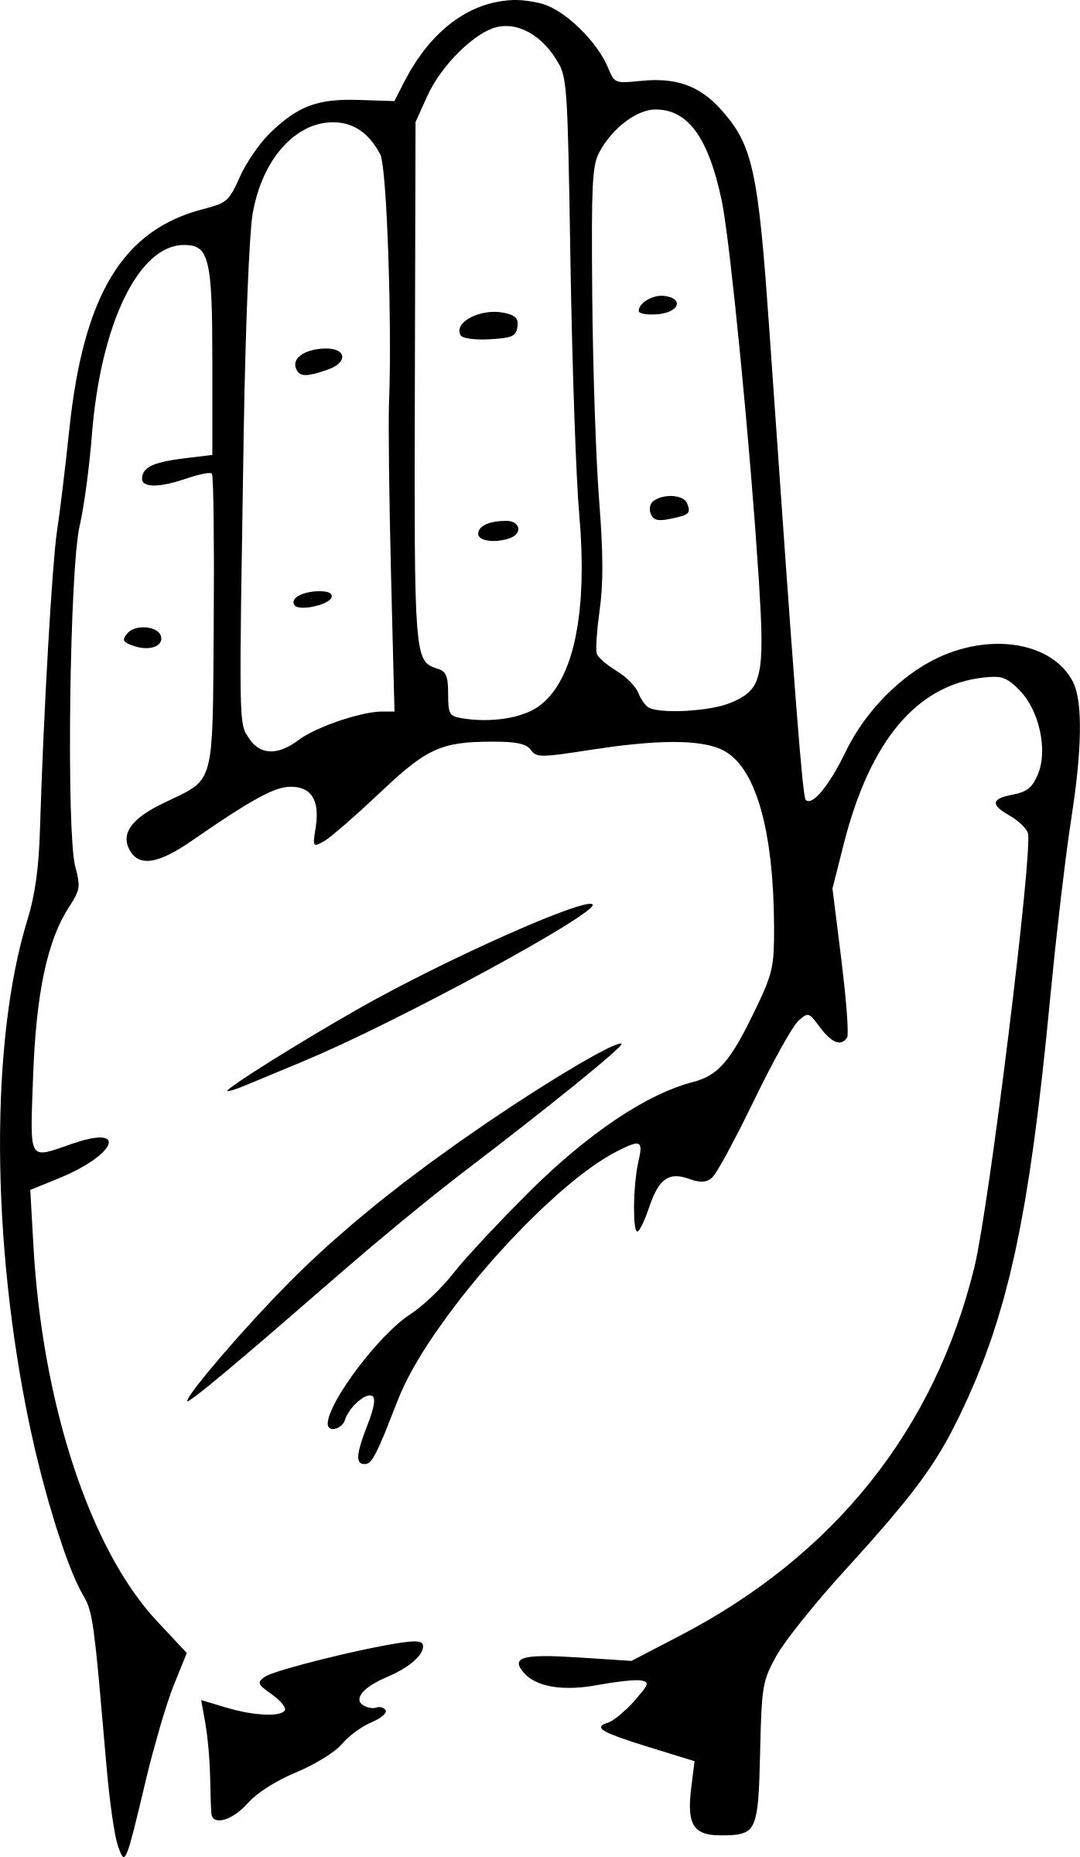 Hand Congress symbol png transparent